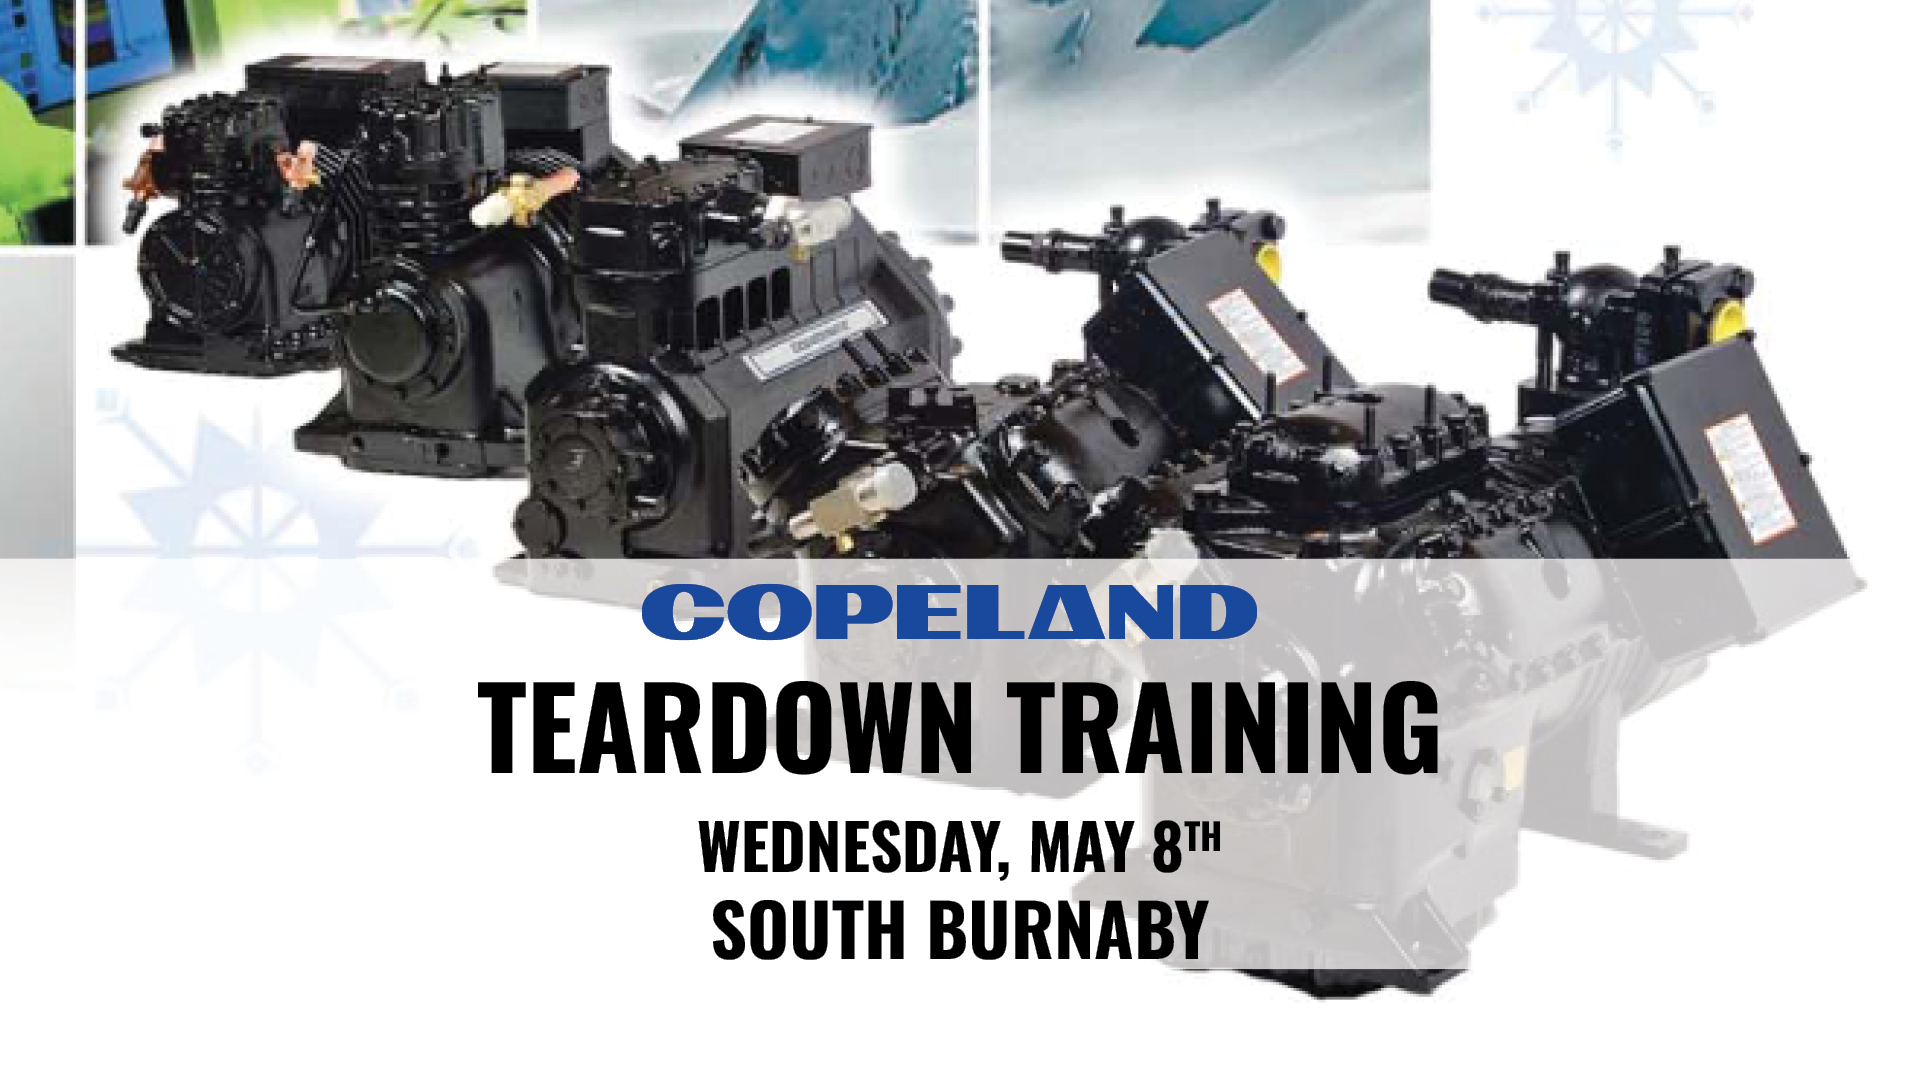  Copeland Teardown Training at South Burnaby 